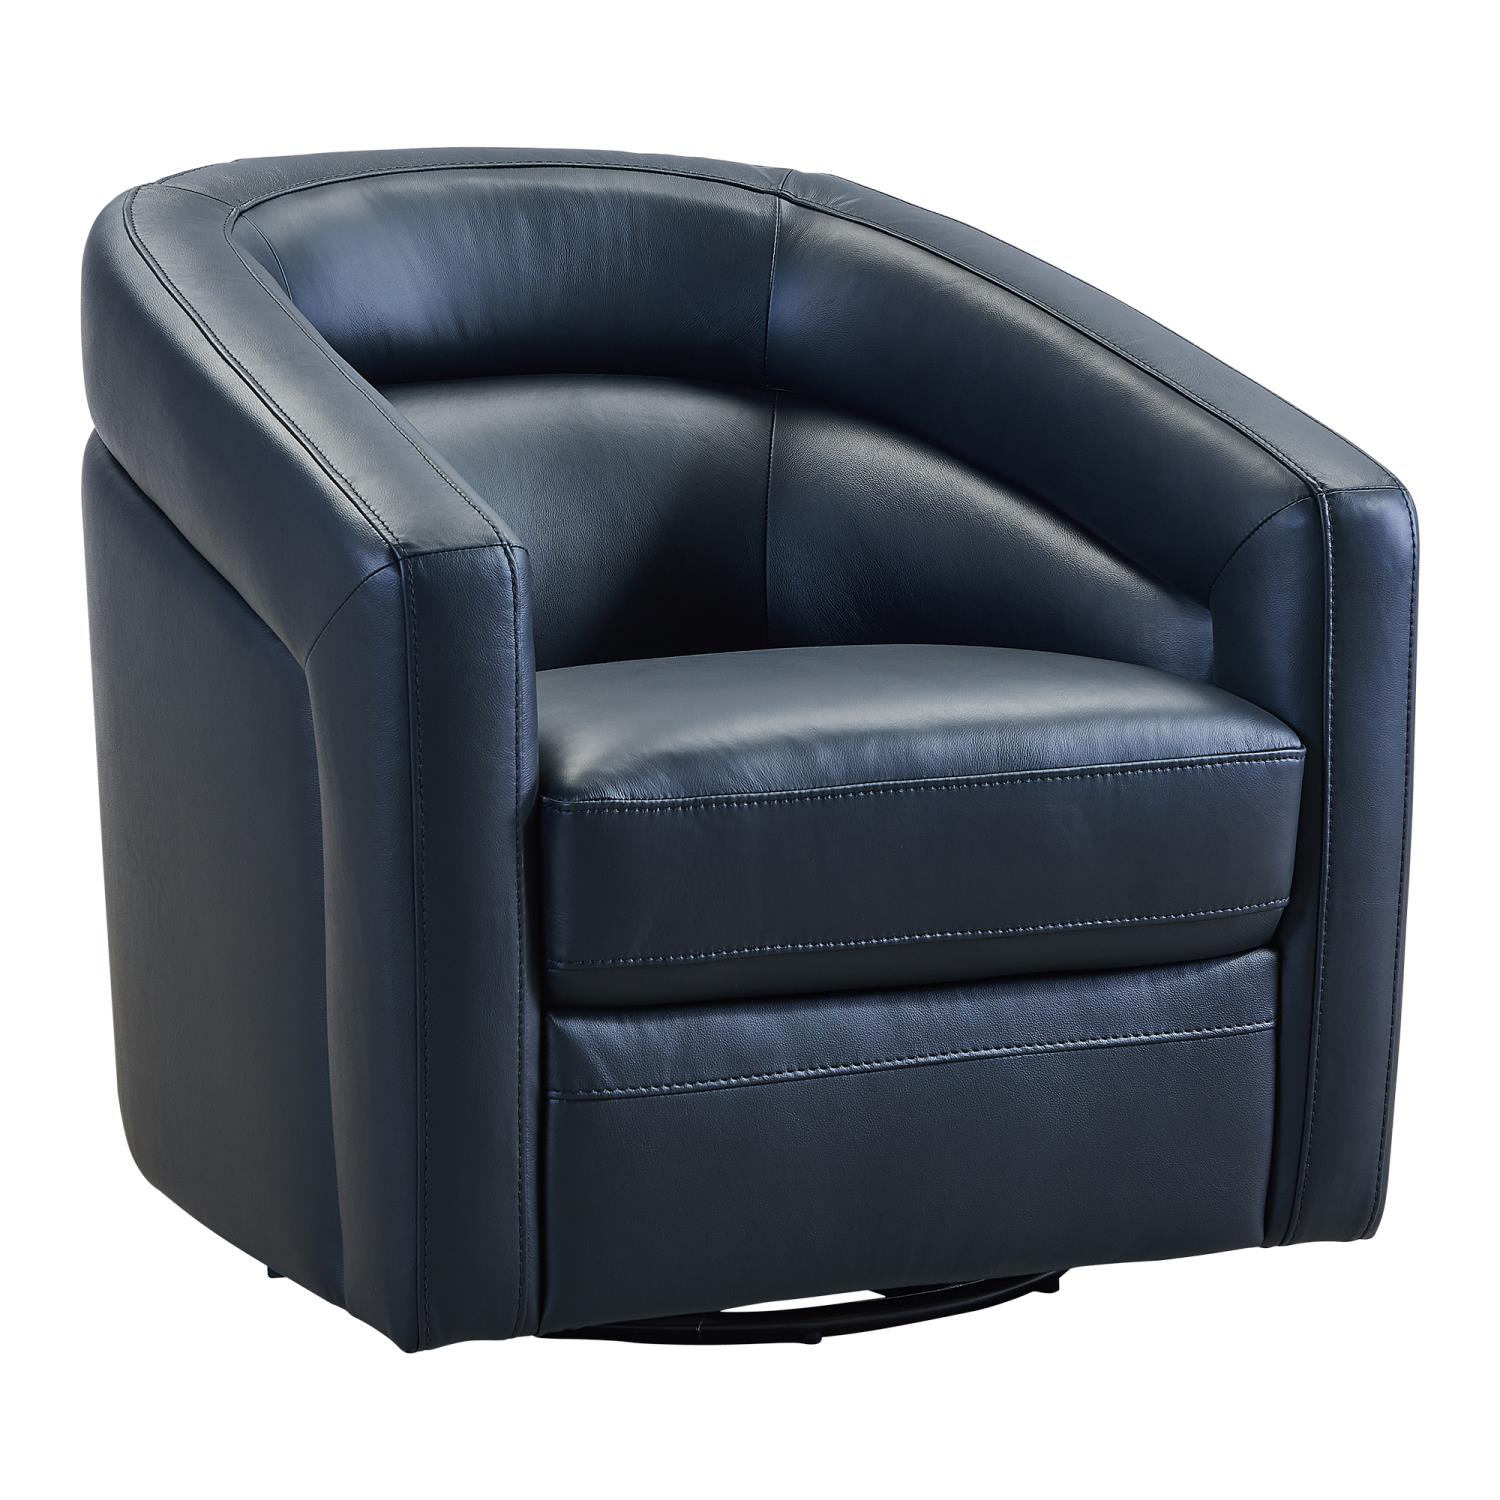 Armen Living Desi Contemporary Black Genuine Leather Accent Chair LCDSCHBLK